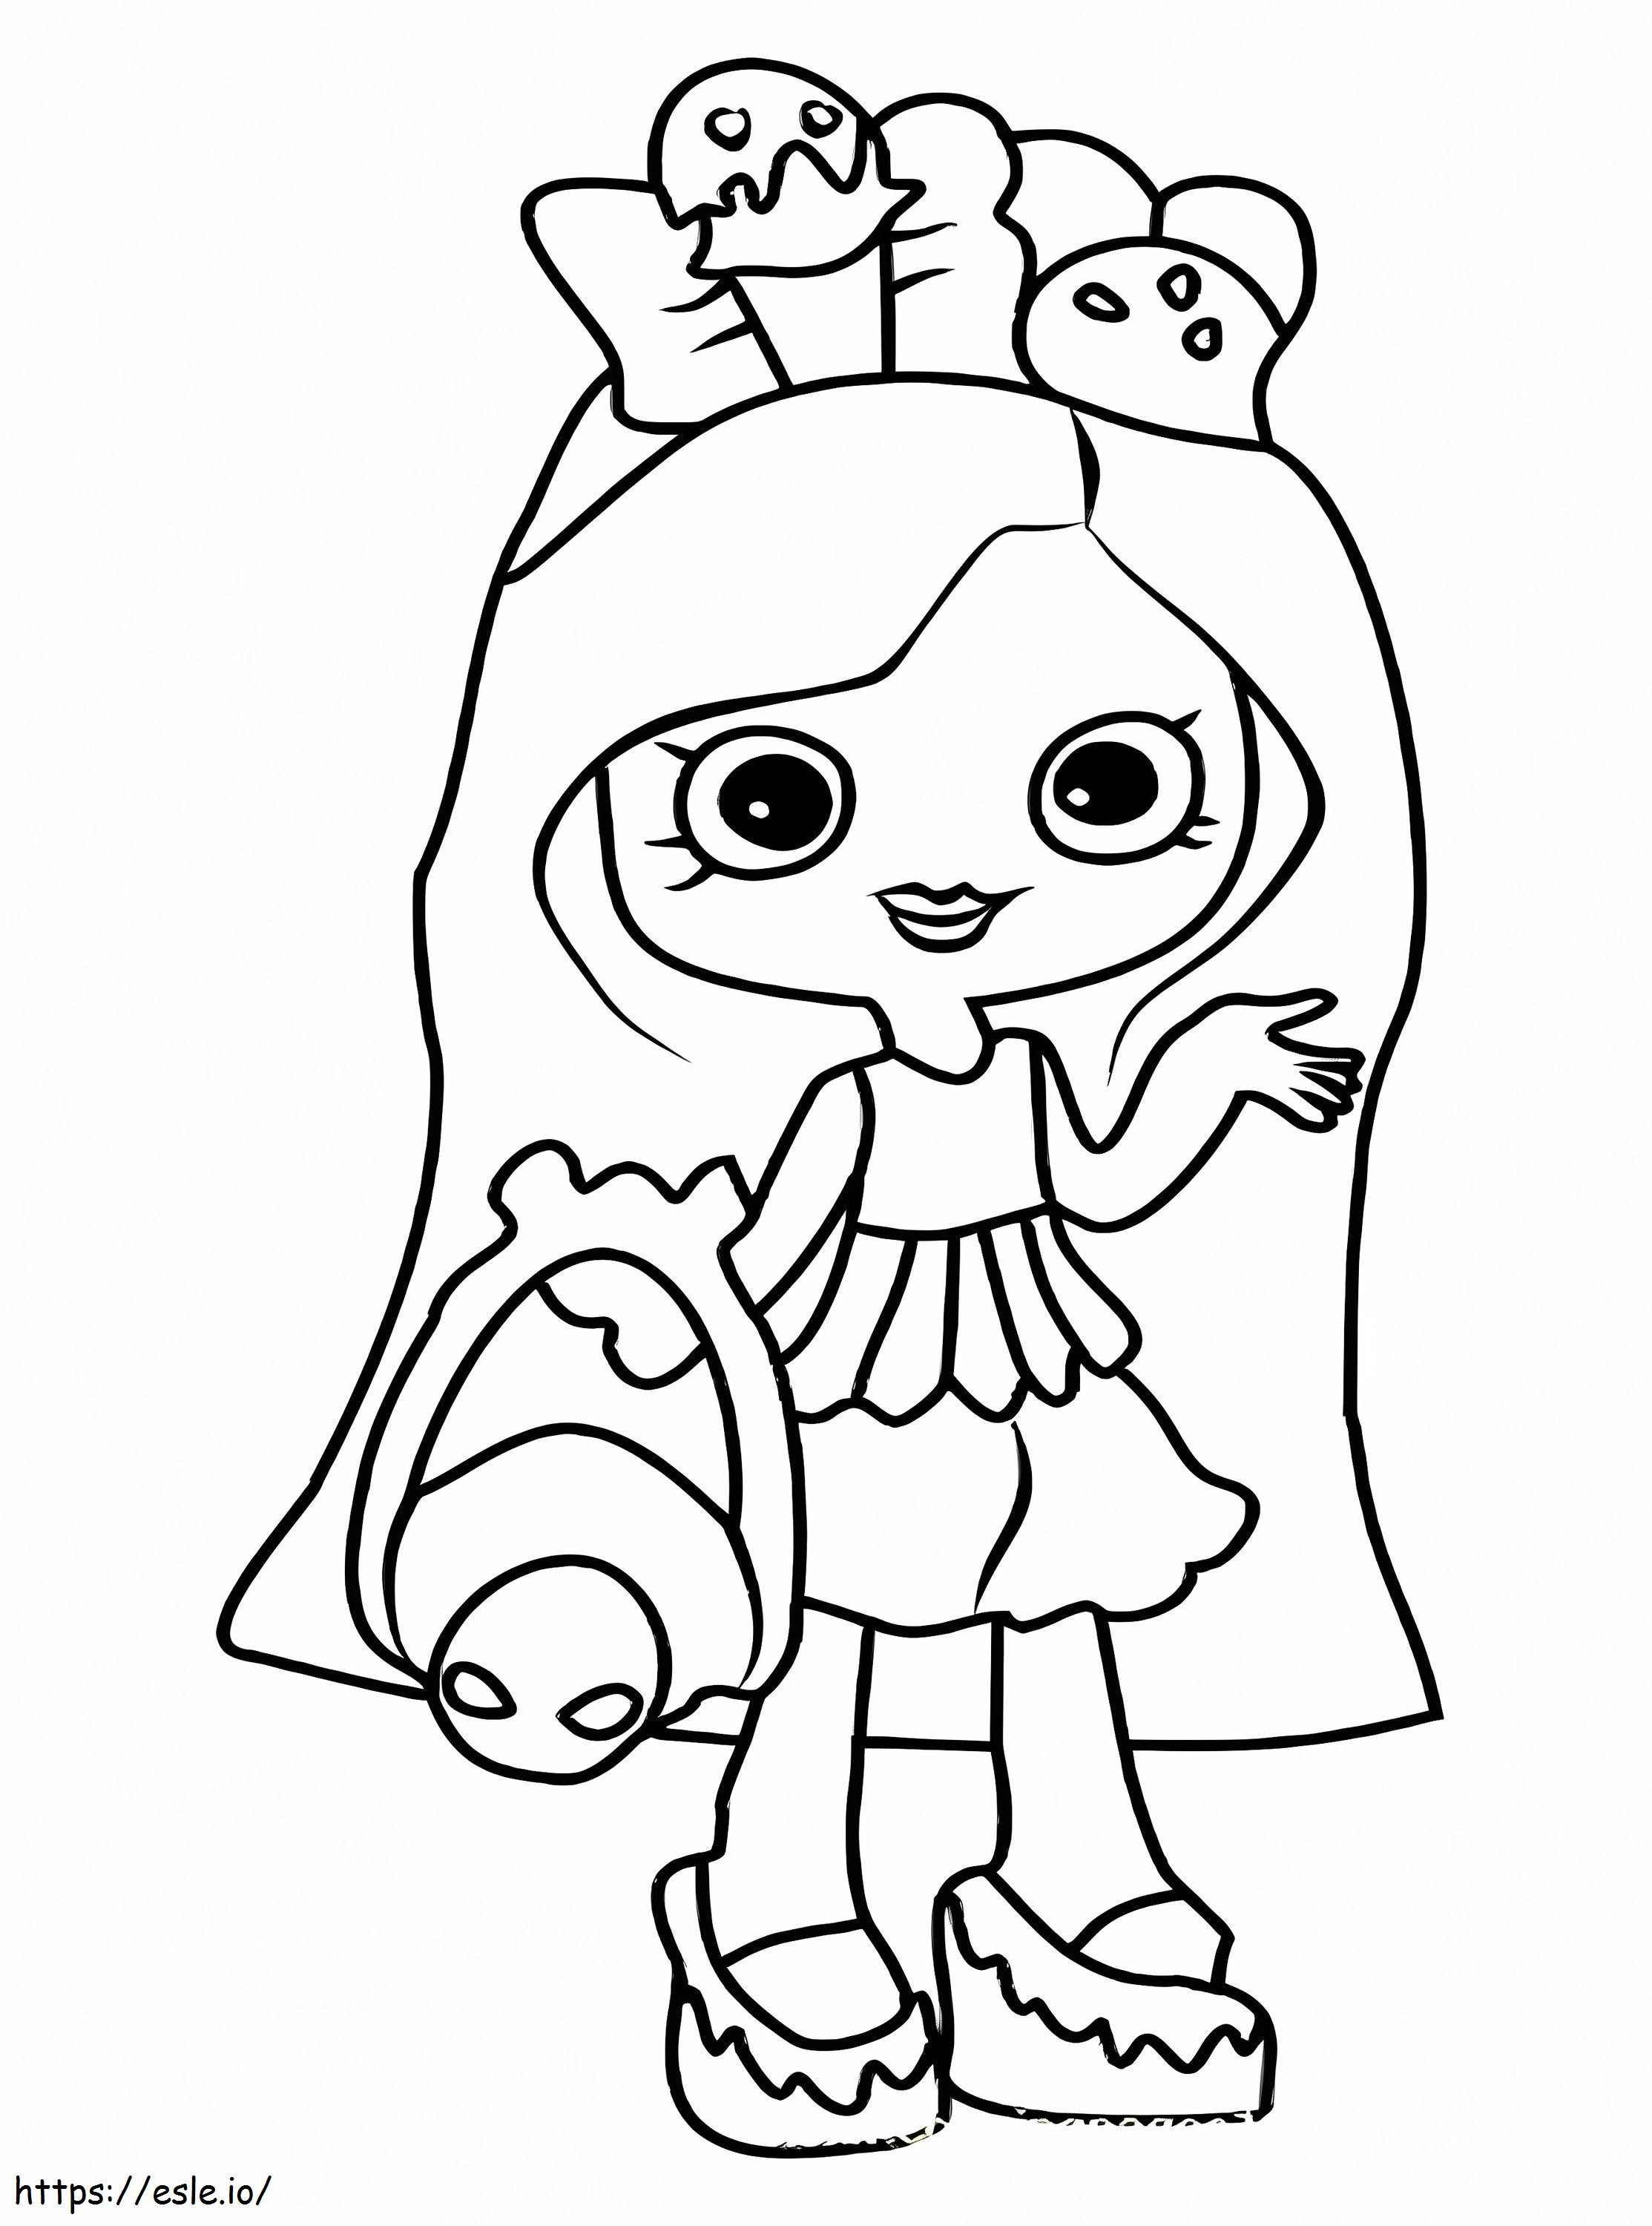 Mała Peppa jako Shopkins kolorowanka